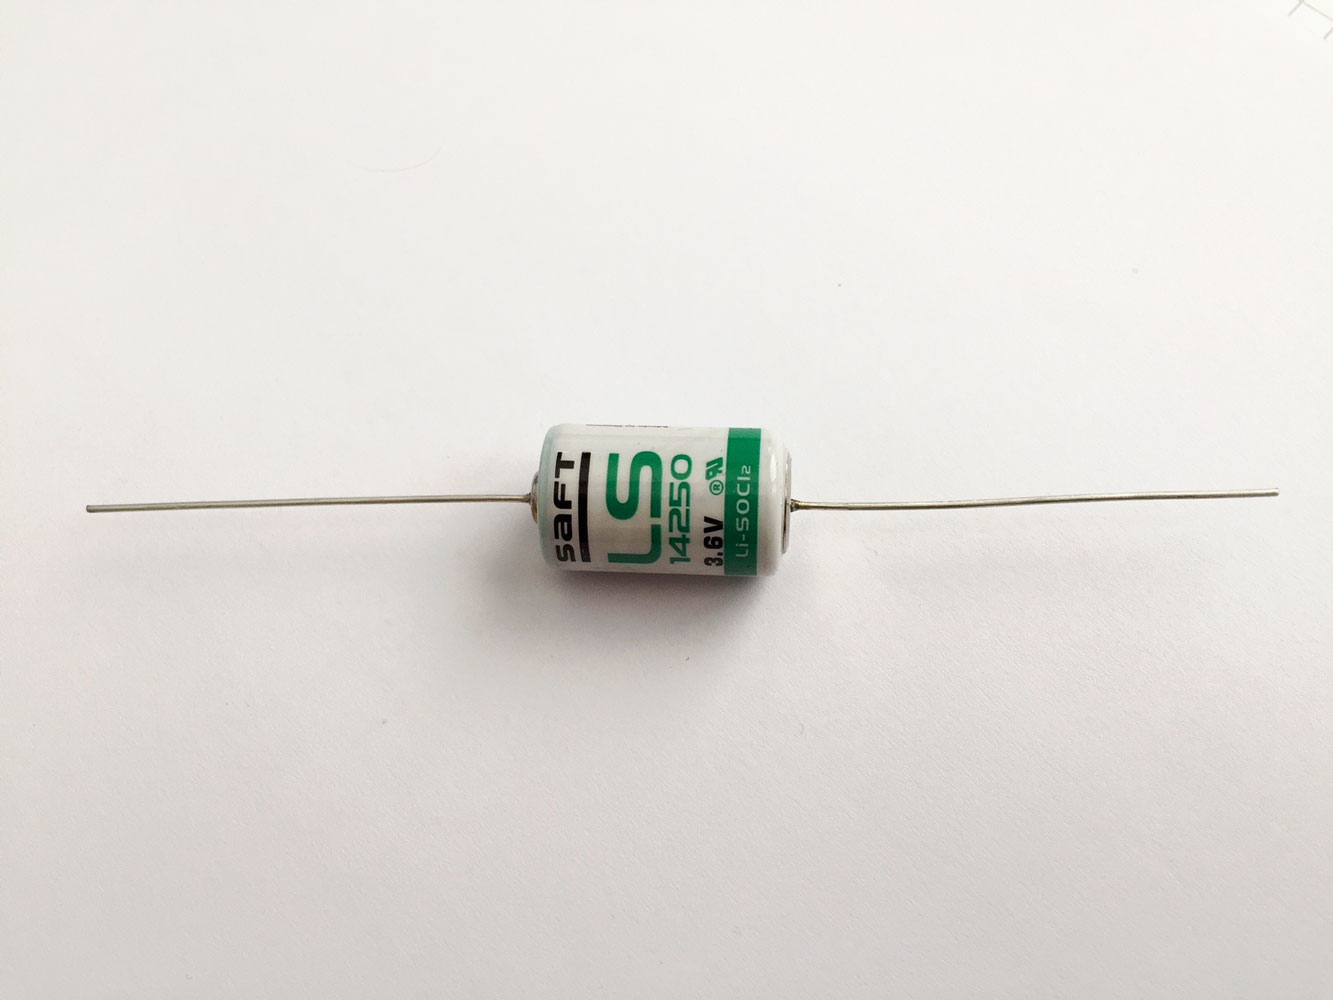 Saft LS 14250-CNA 1/2AA Lithium-Thionylchlorid Batterie 3,6V axial  